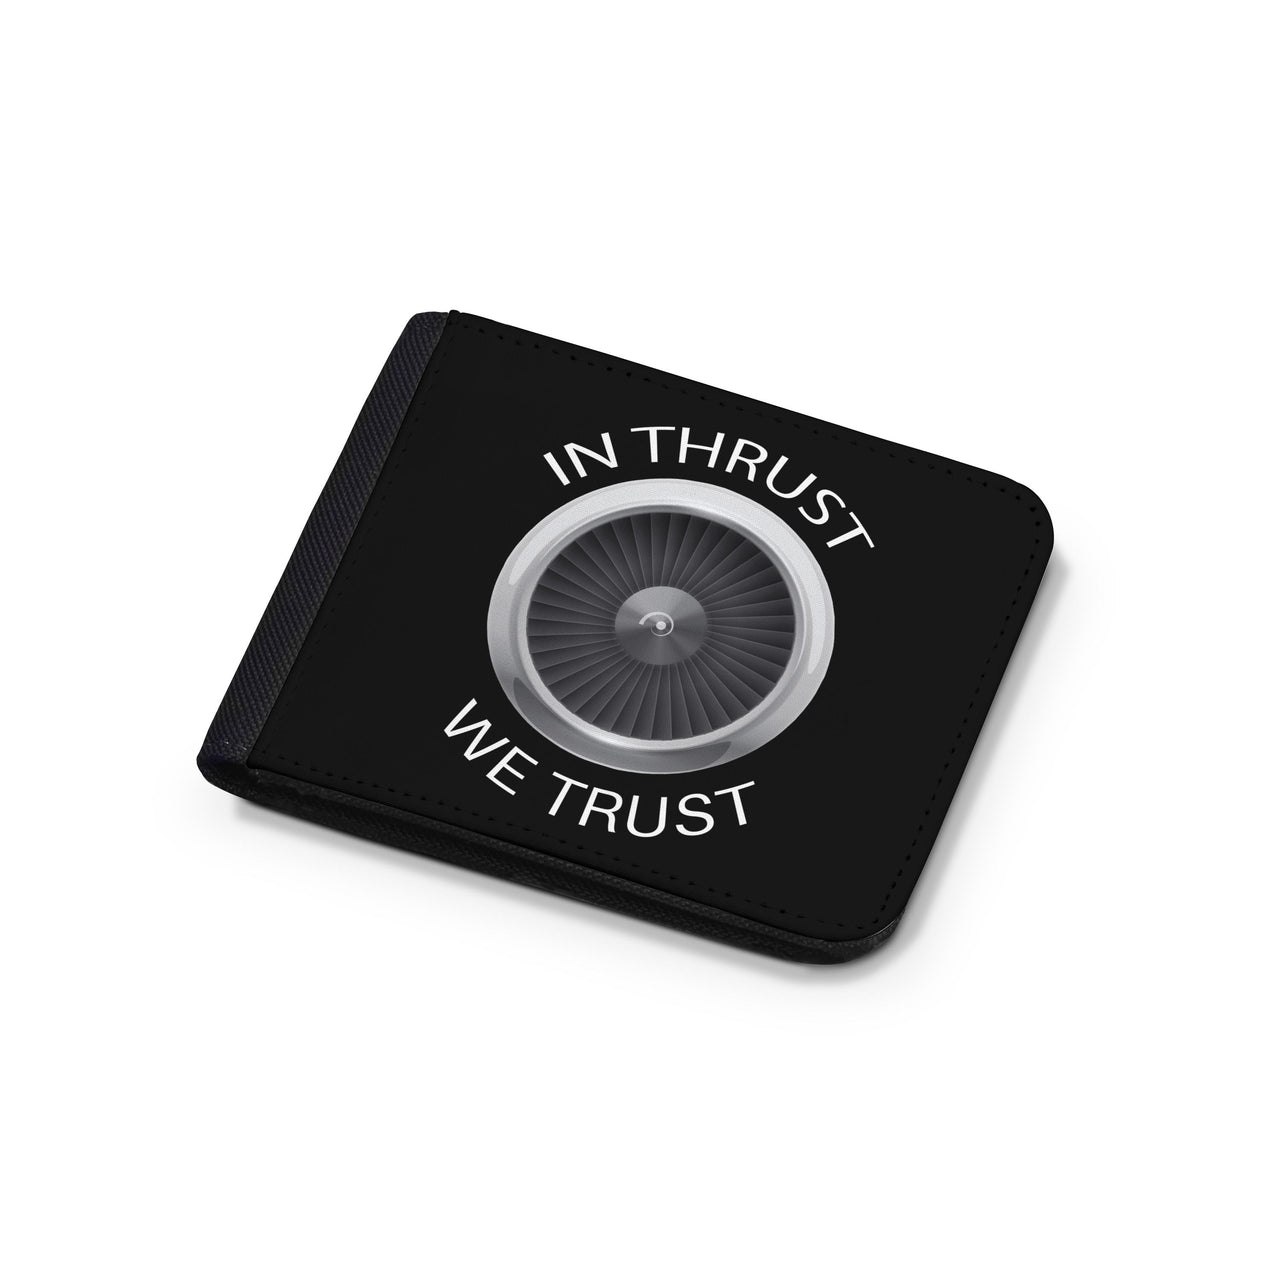 In Thrust We Trust Designed Wallets